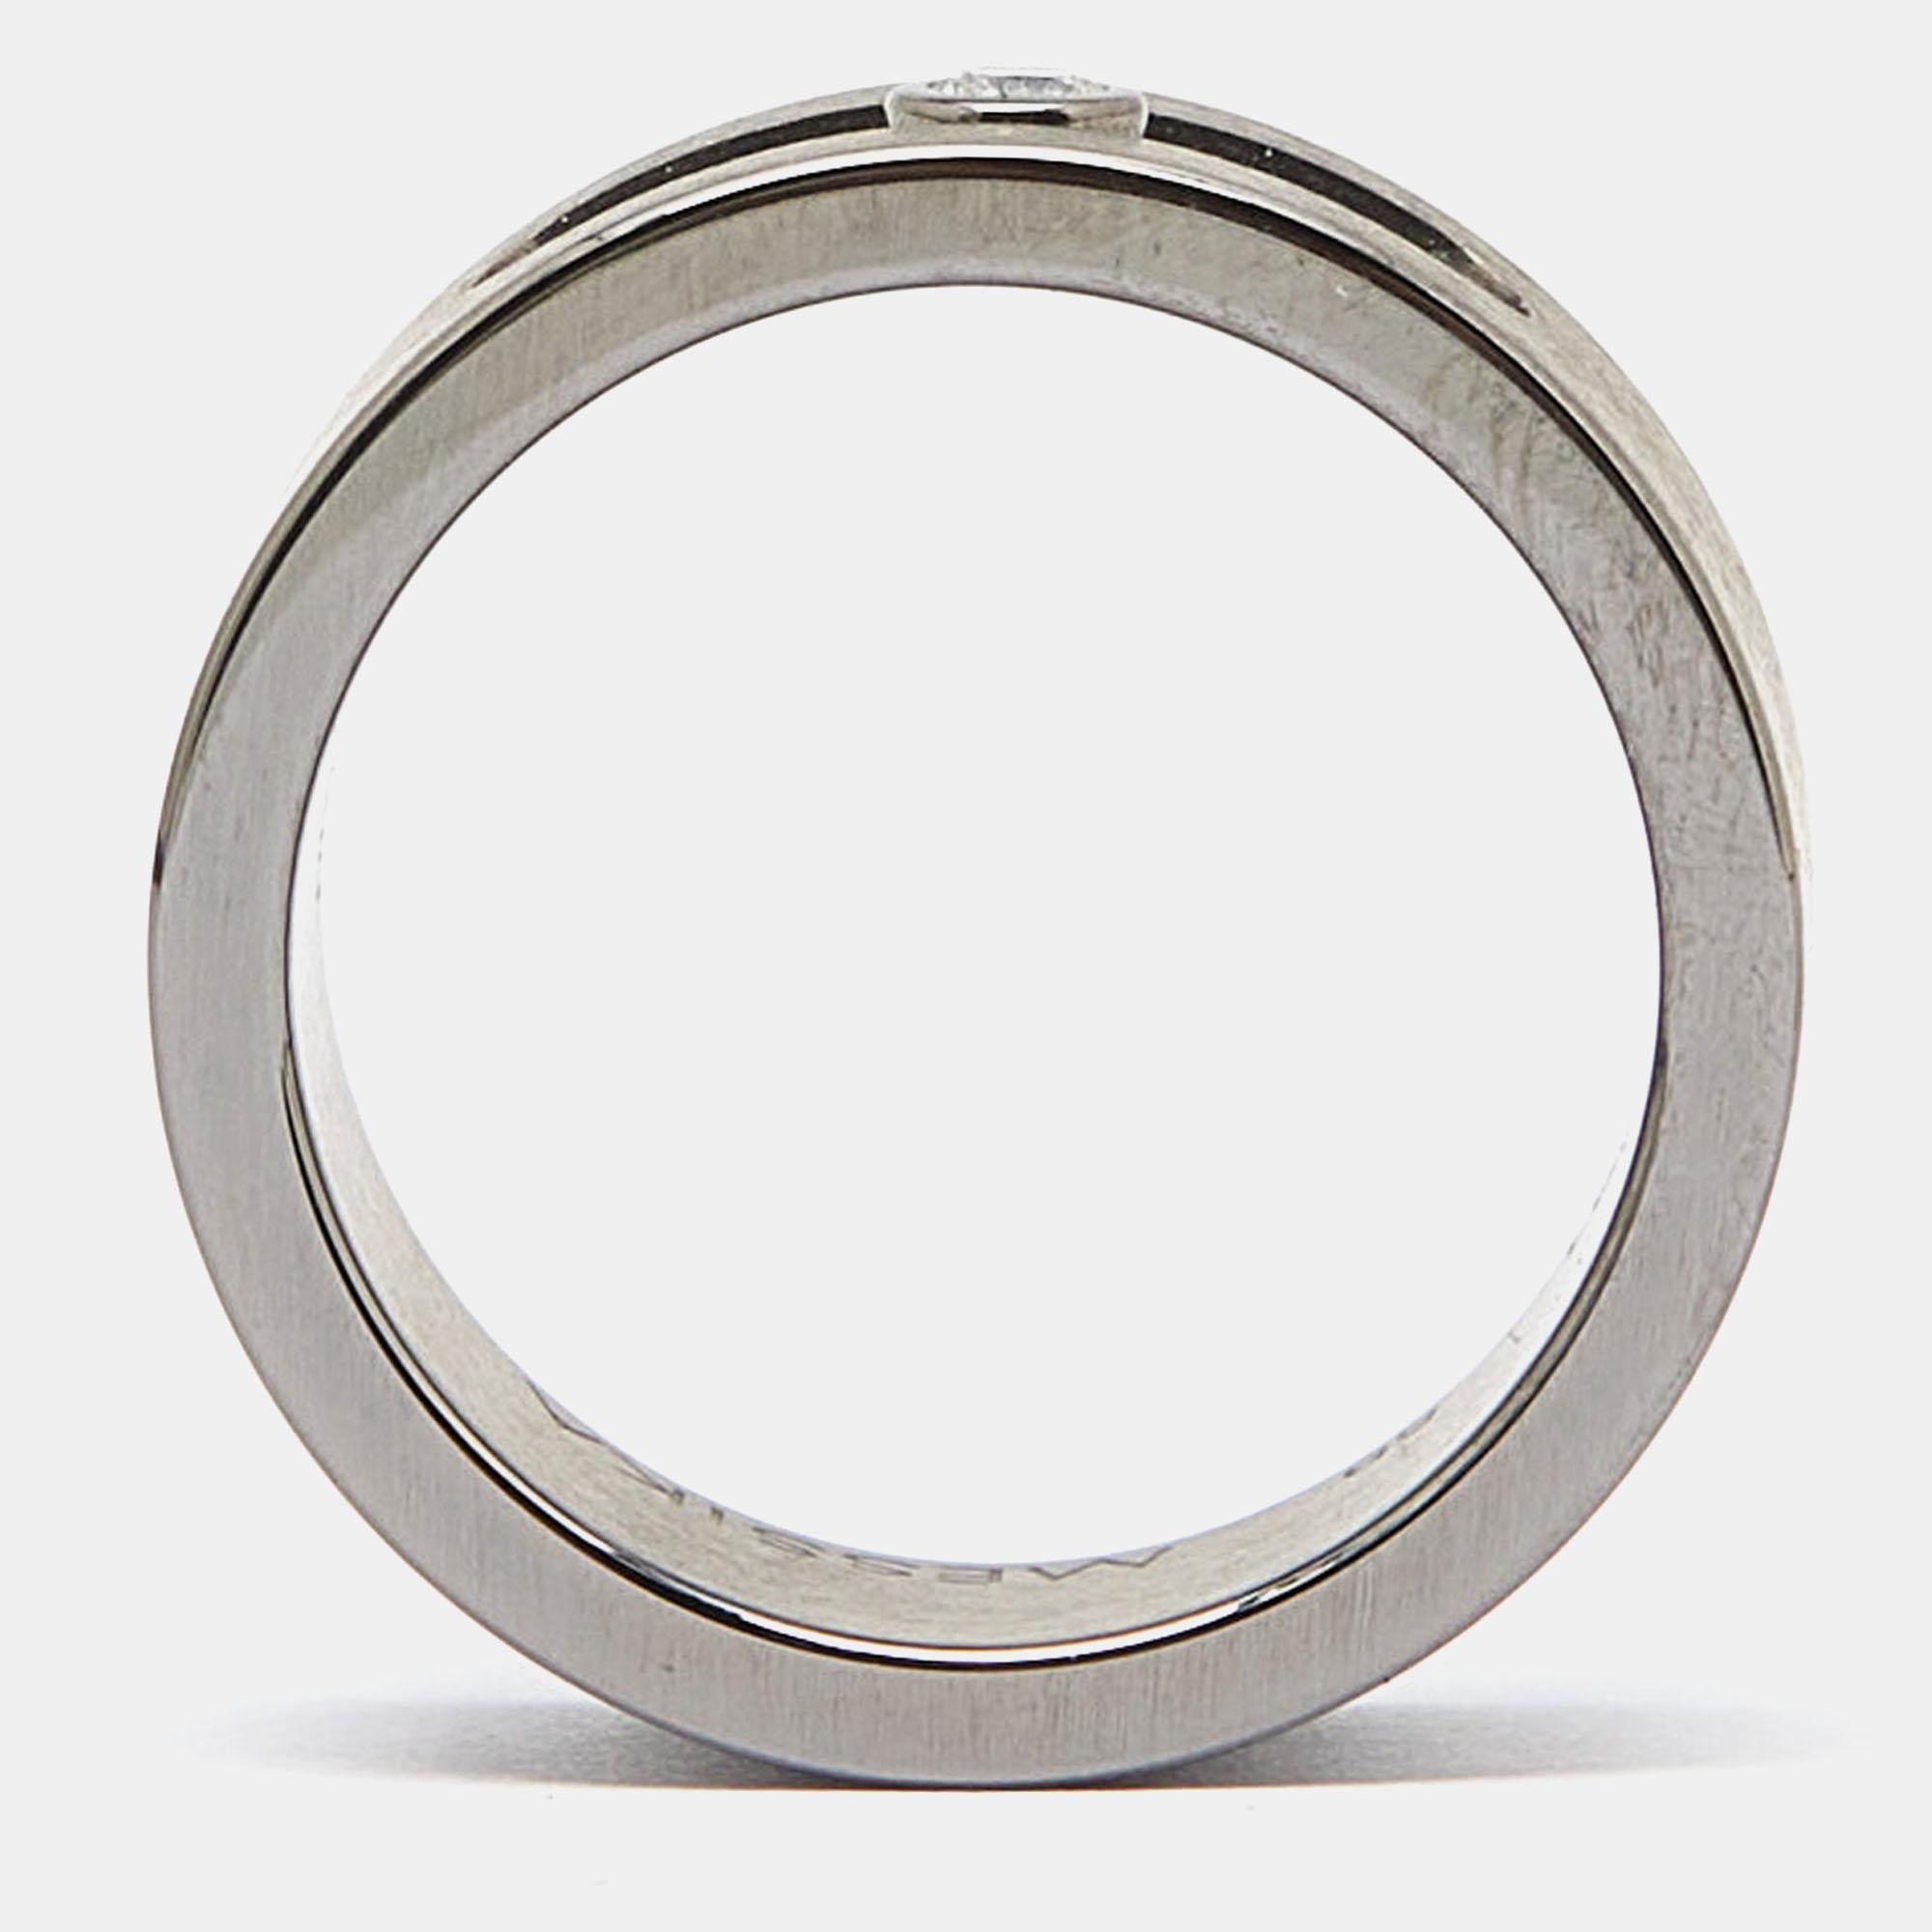 Messika Move Titanium Diamond Ring Size 58 For Sale 4